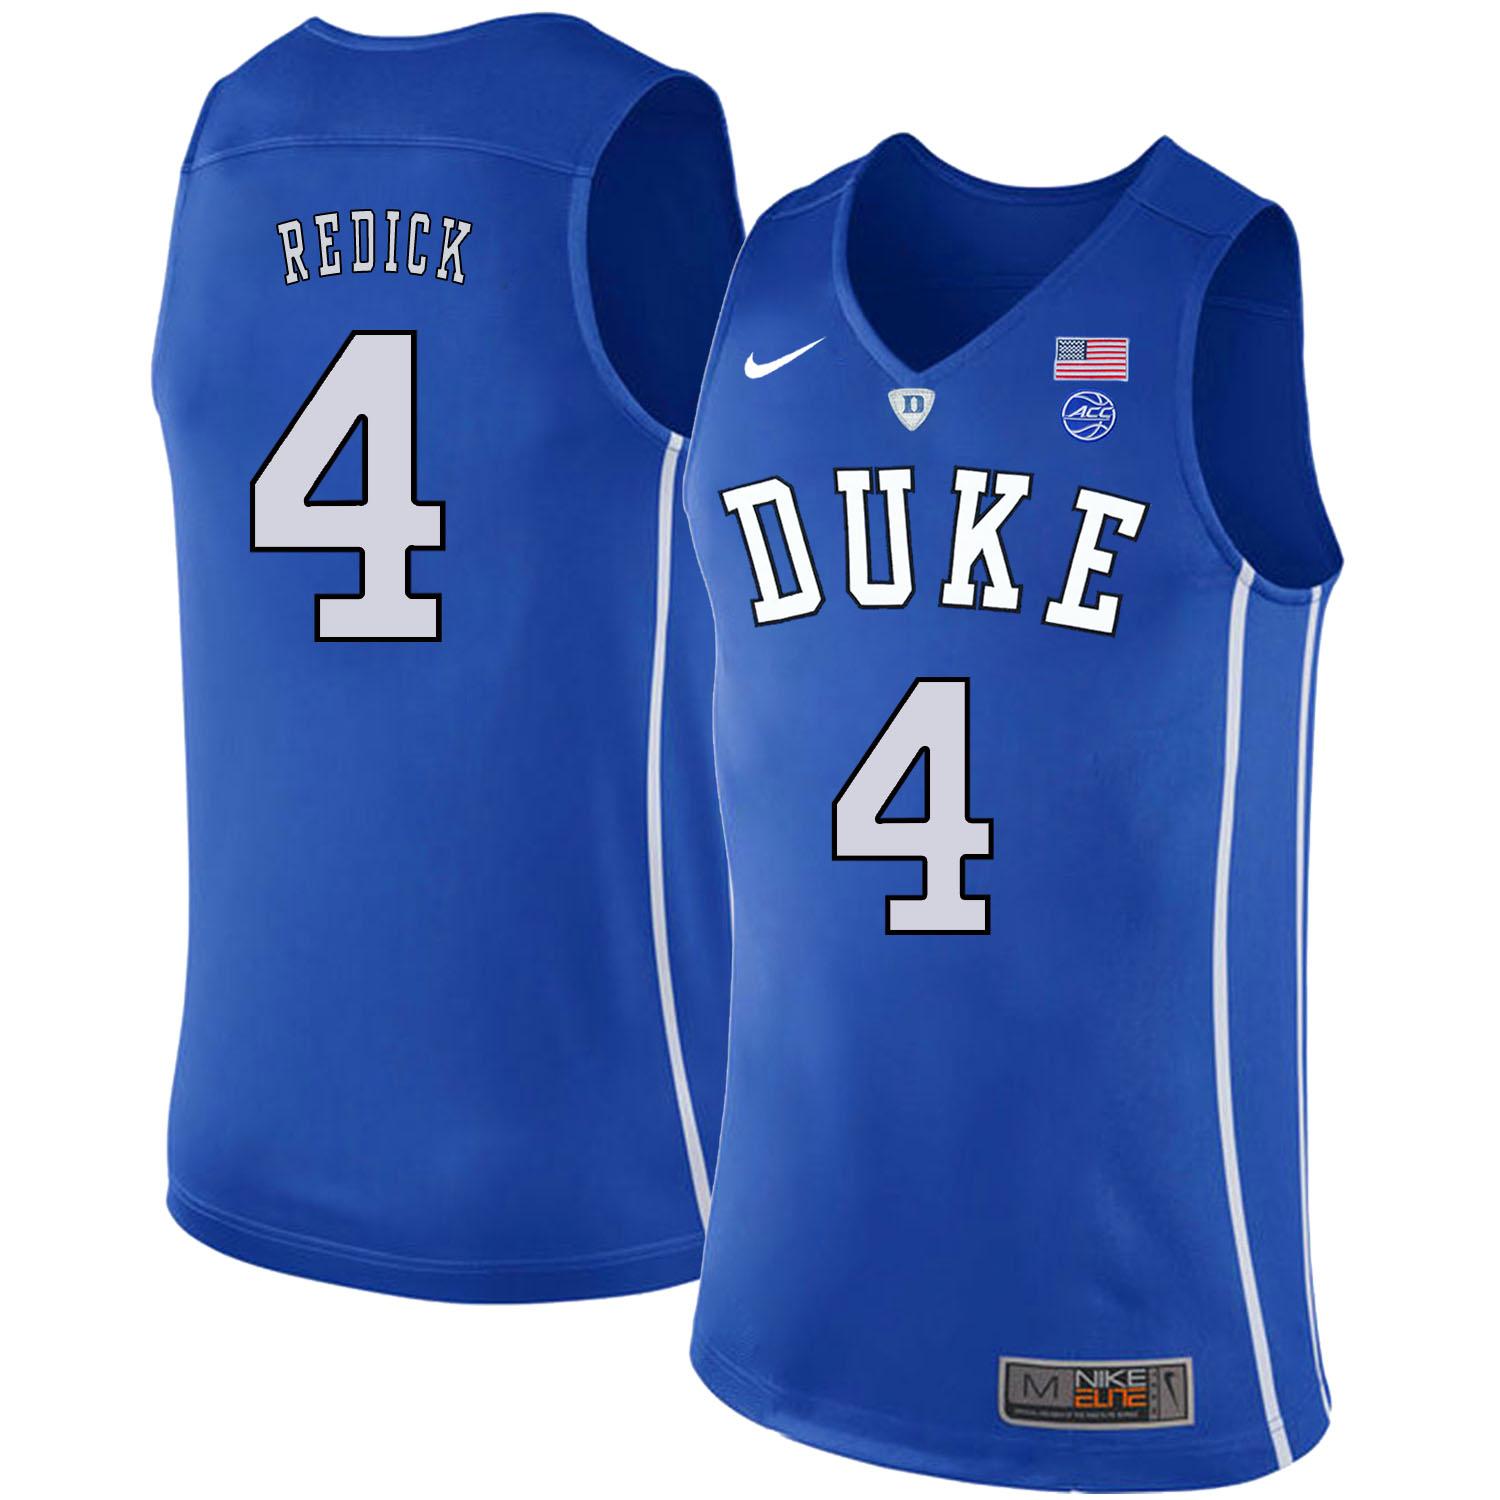 Duke Blue Devils 4 JJ Redick Blue Nike College Basketball Jersey